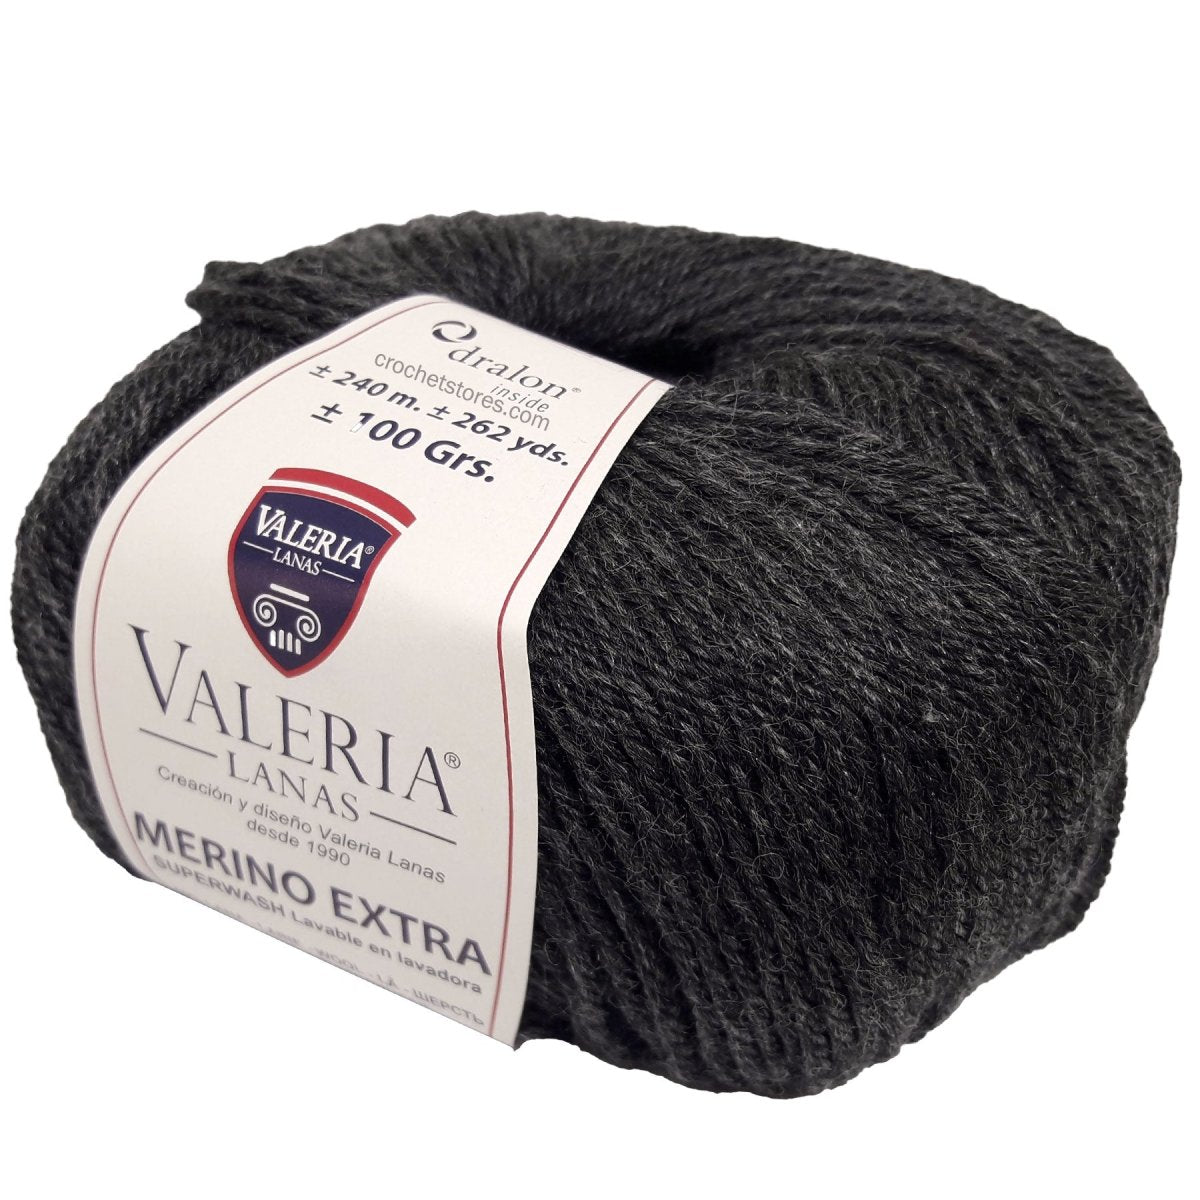 MERINO EXTRA - Crochetstores1009-1338435411405199